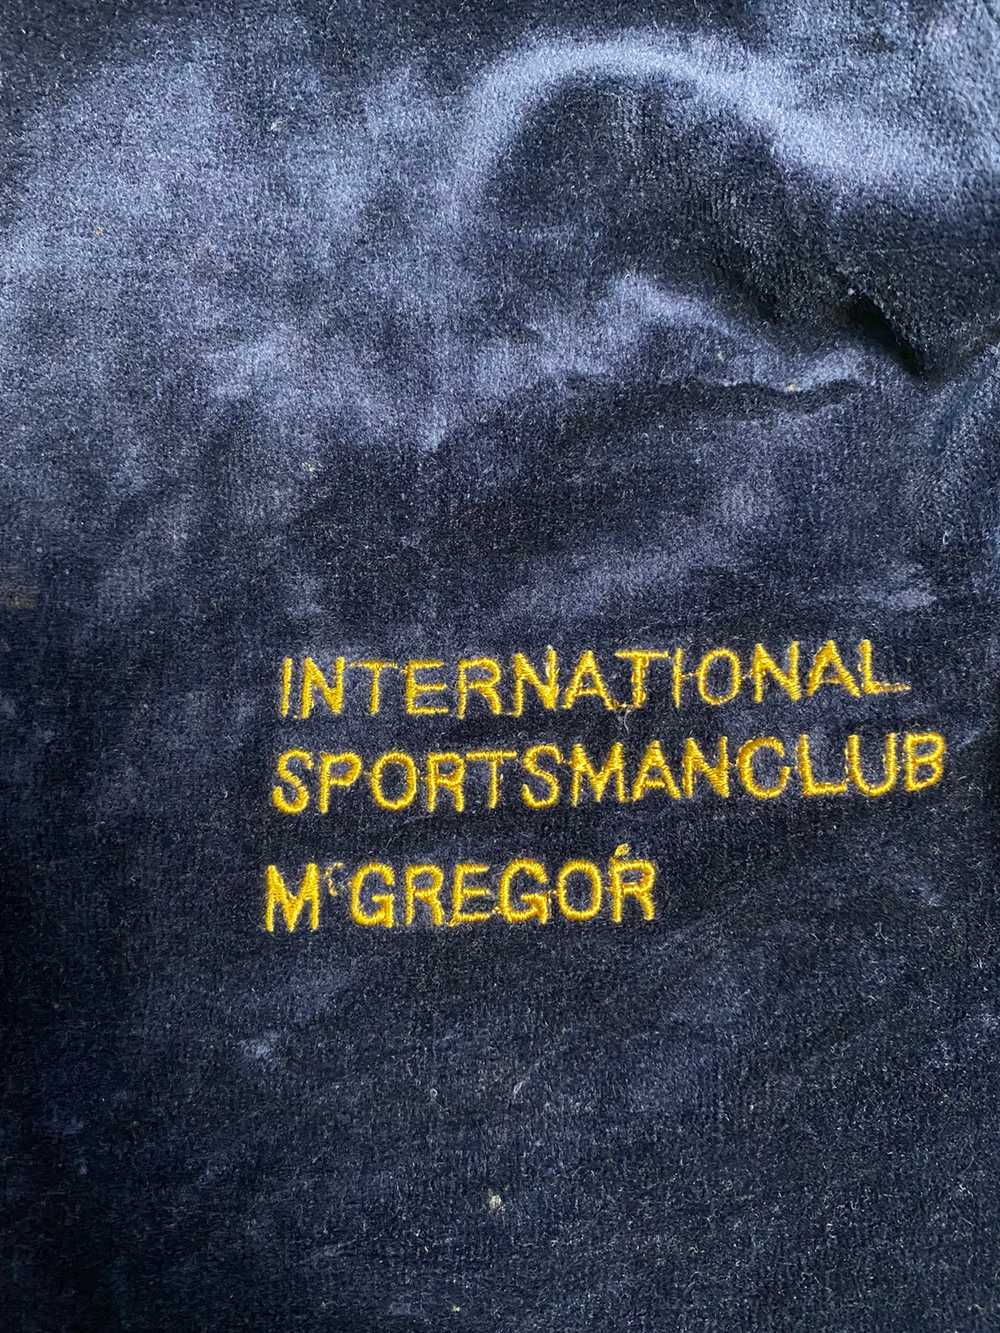 Vintage - Mc GREGOR INTERNATIONAL SPORTSMANCLUB - image 3